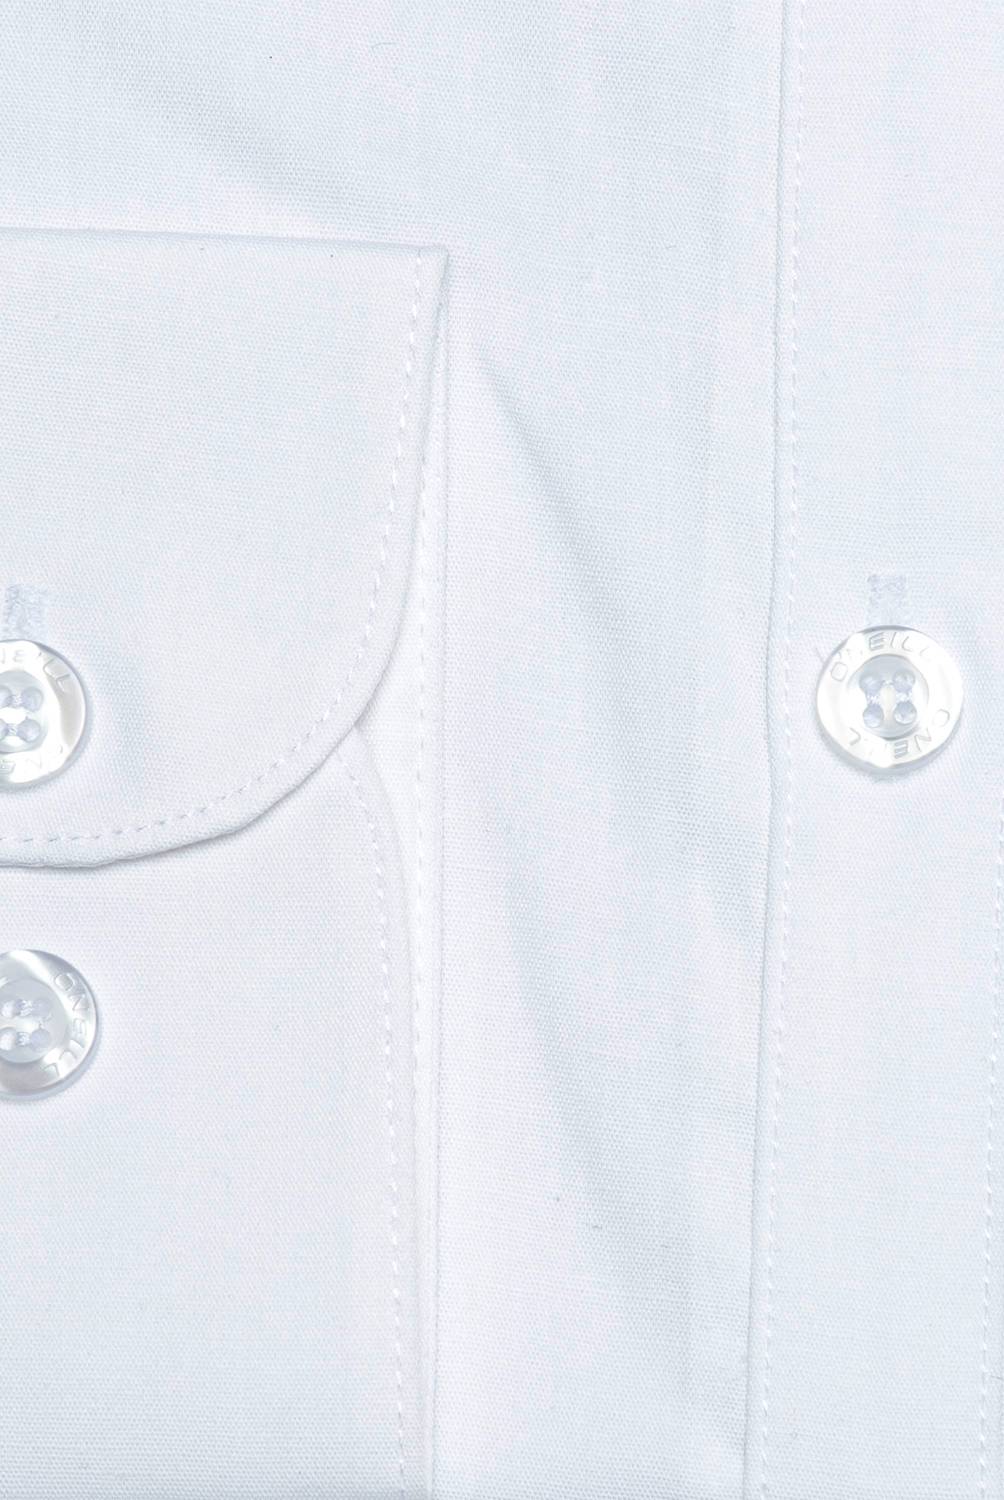 O'NEILL - Blusa Escolar, 97% Algodón Strech, Color Blanco .